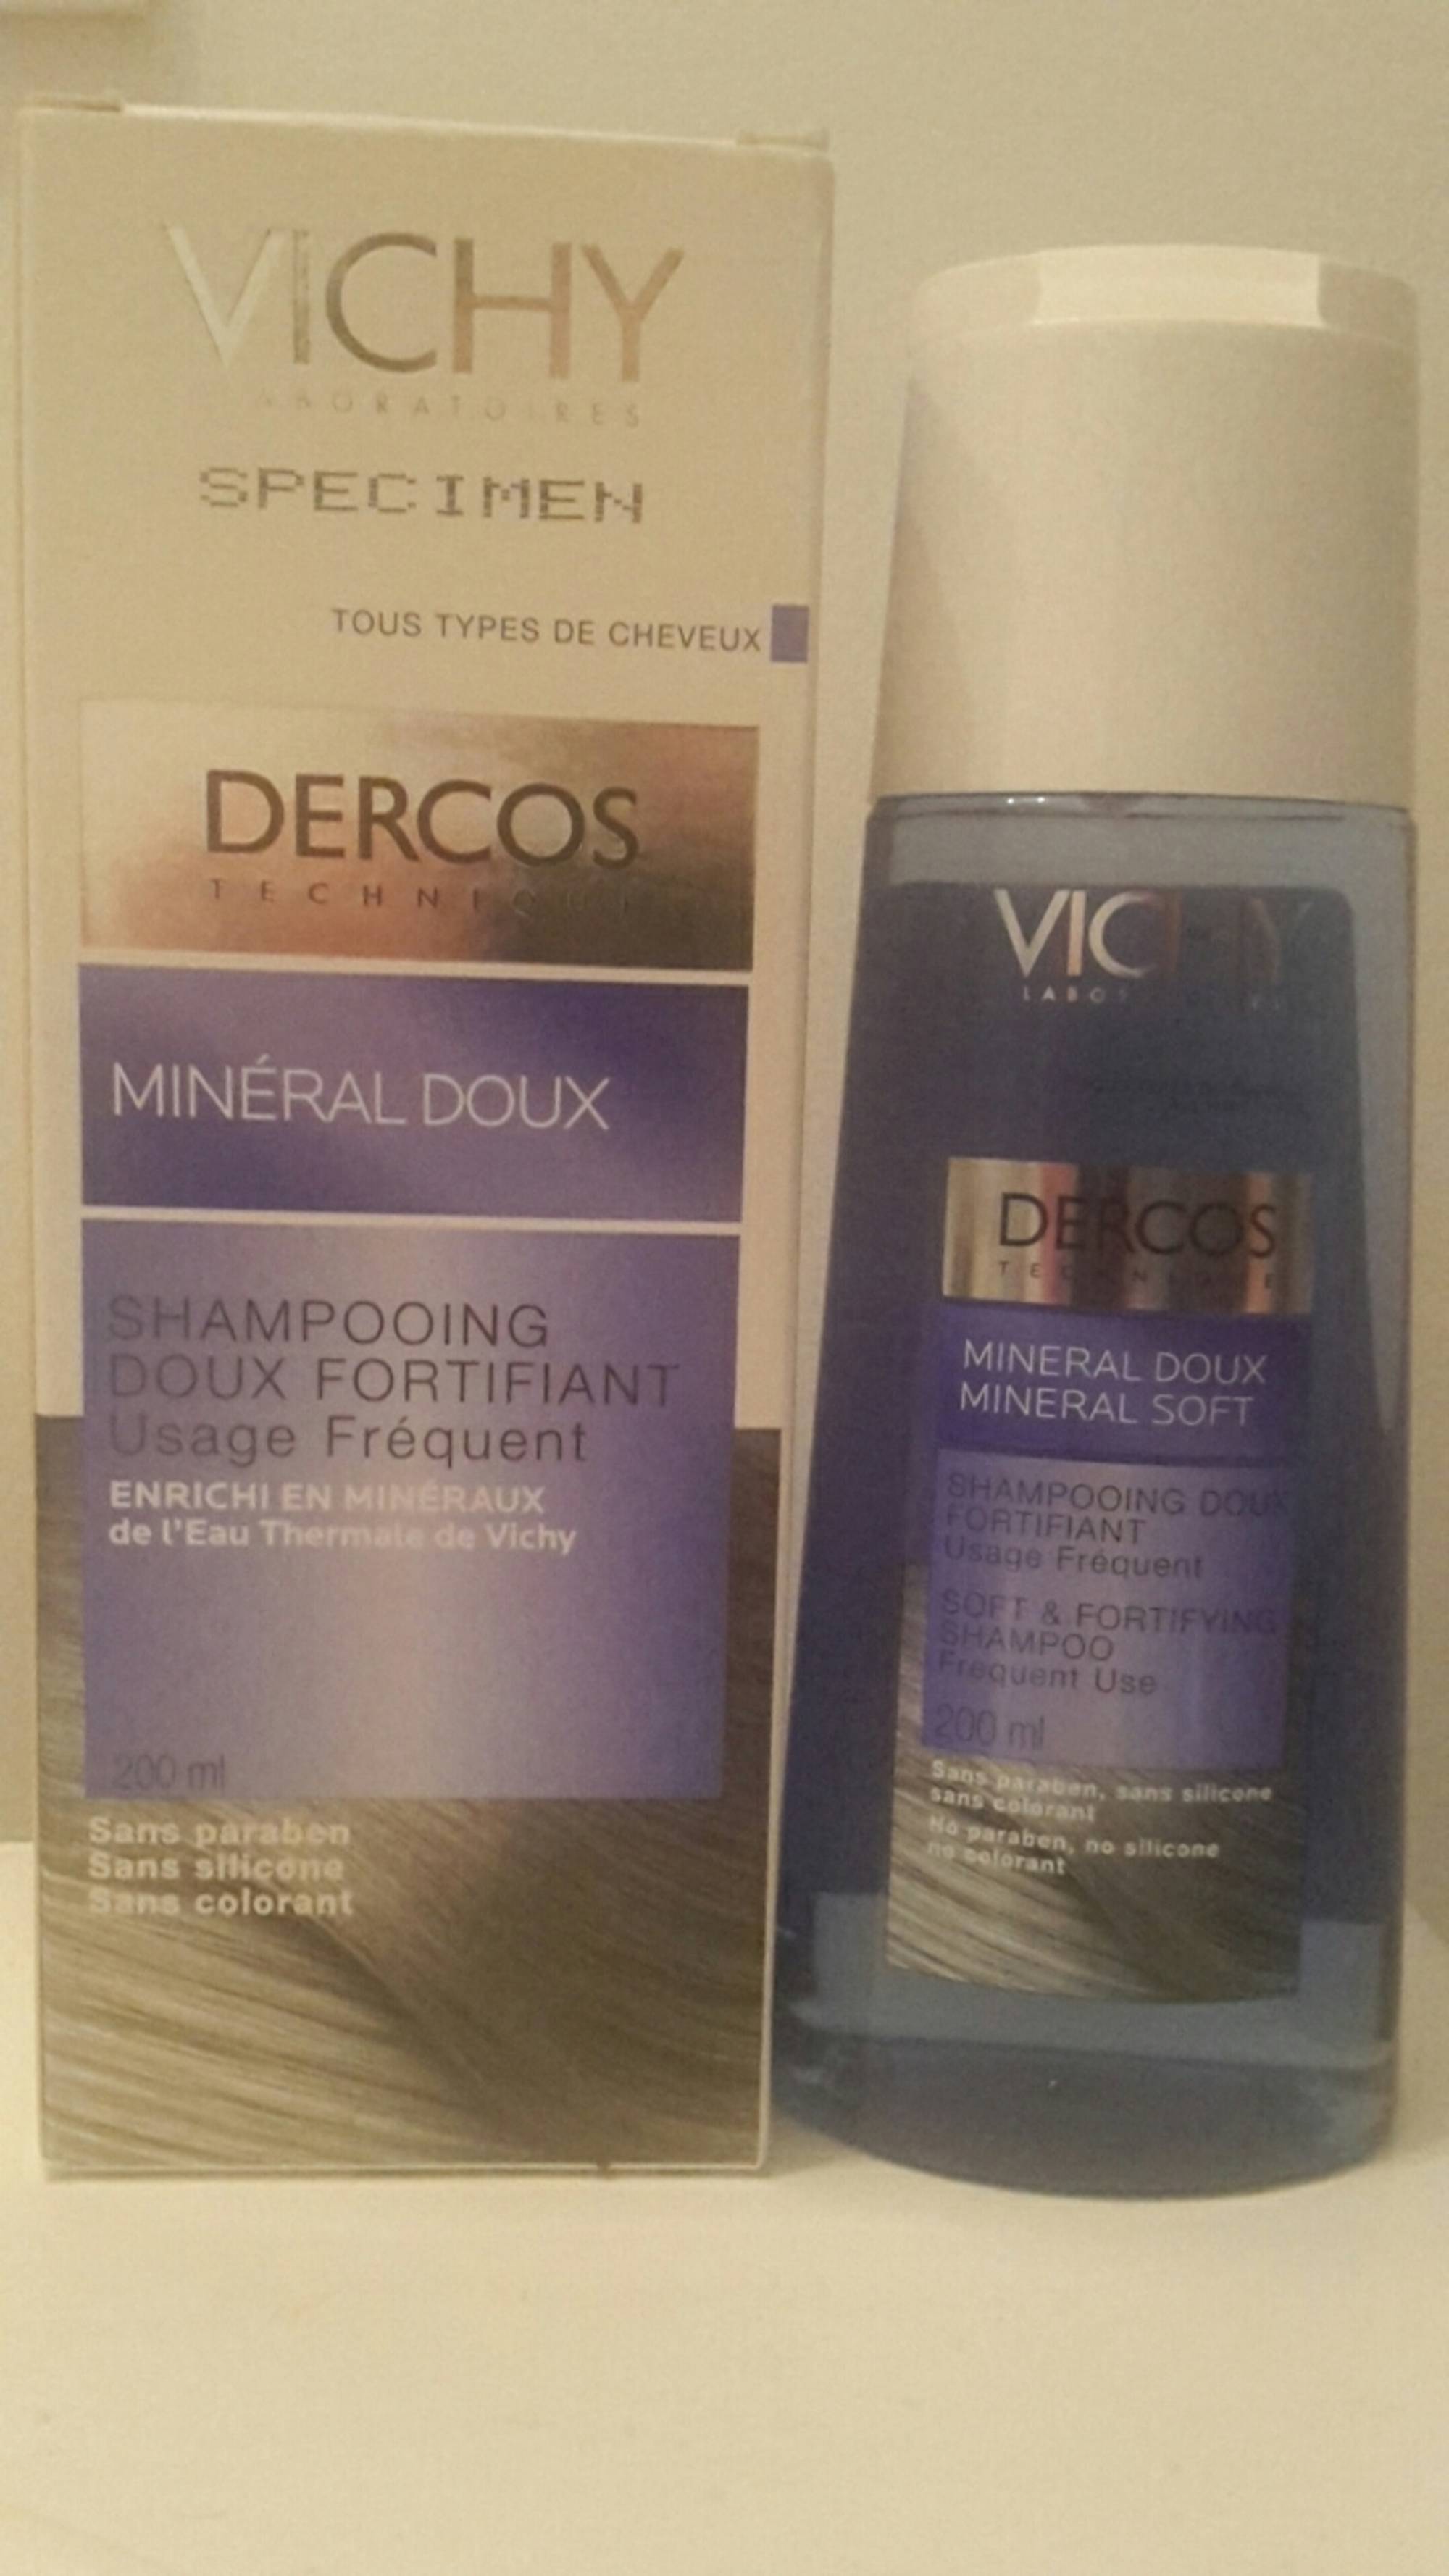 VICHY - Dercos Minéral doux - Shampooing doux fortifiant